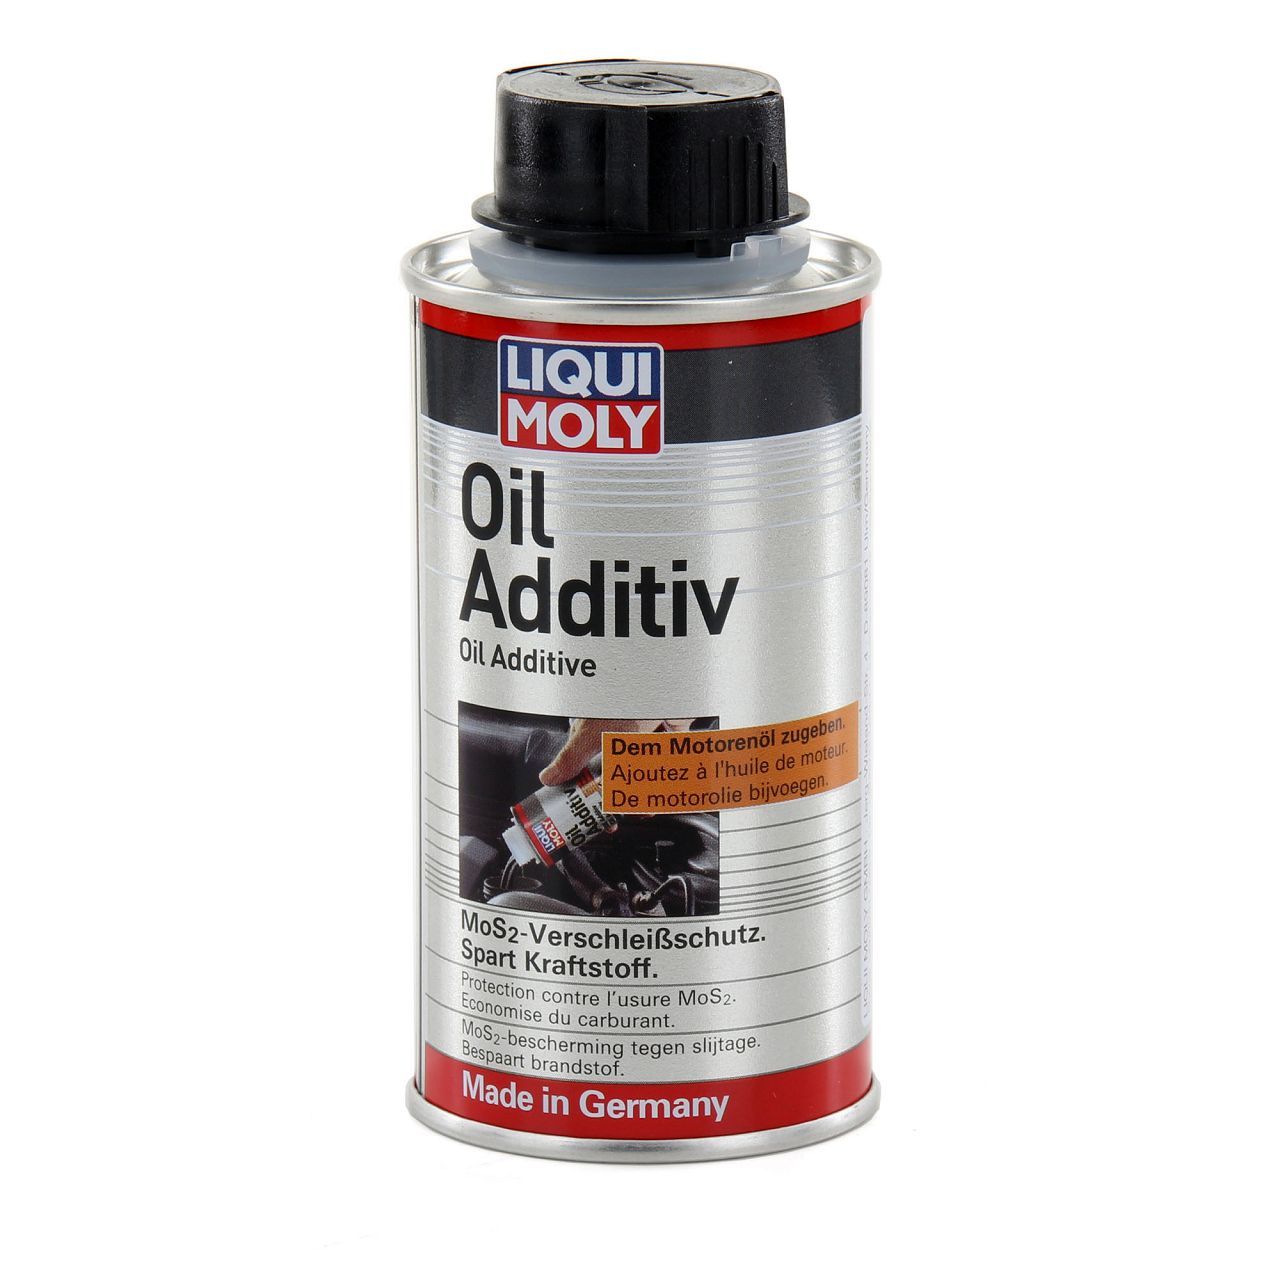 2x 125ml LIQUI MOLY Öl Additiv Öl Zusatz Oil Additiv Verschleißschutz 1011